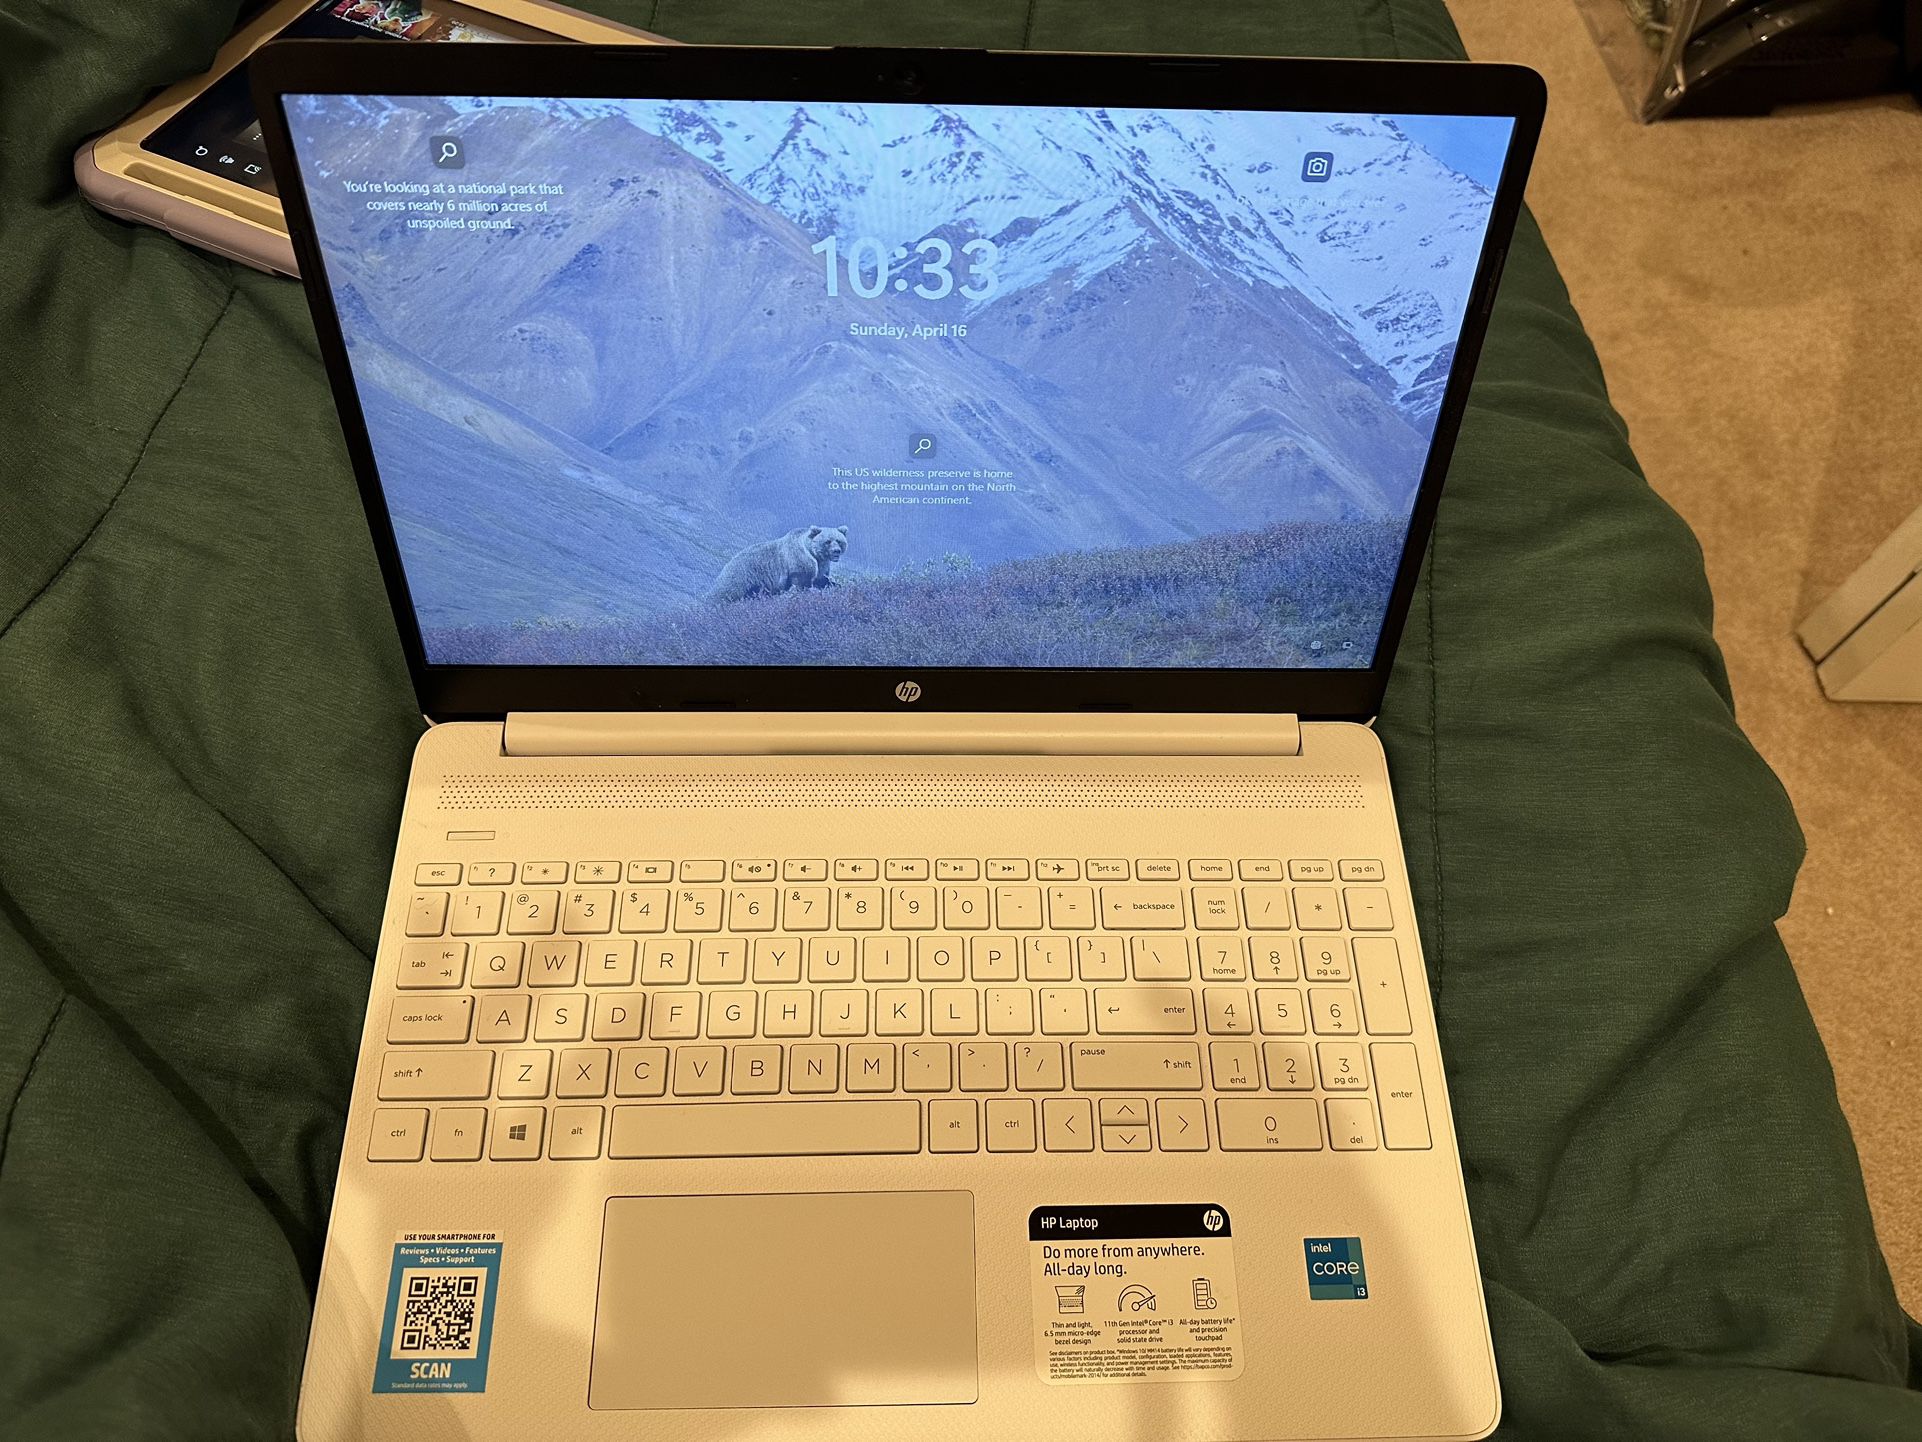 HP 15’ Inch Laptop